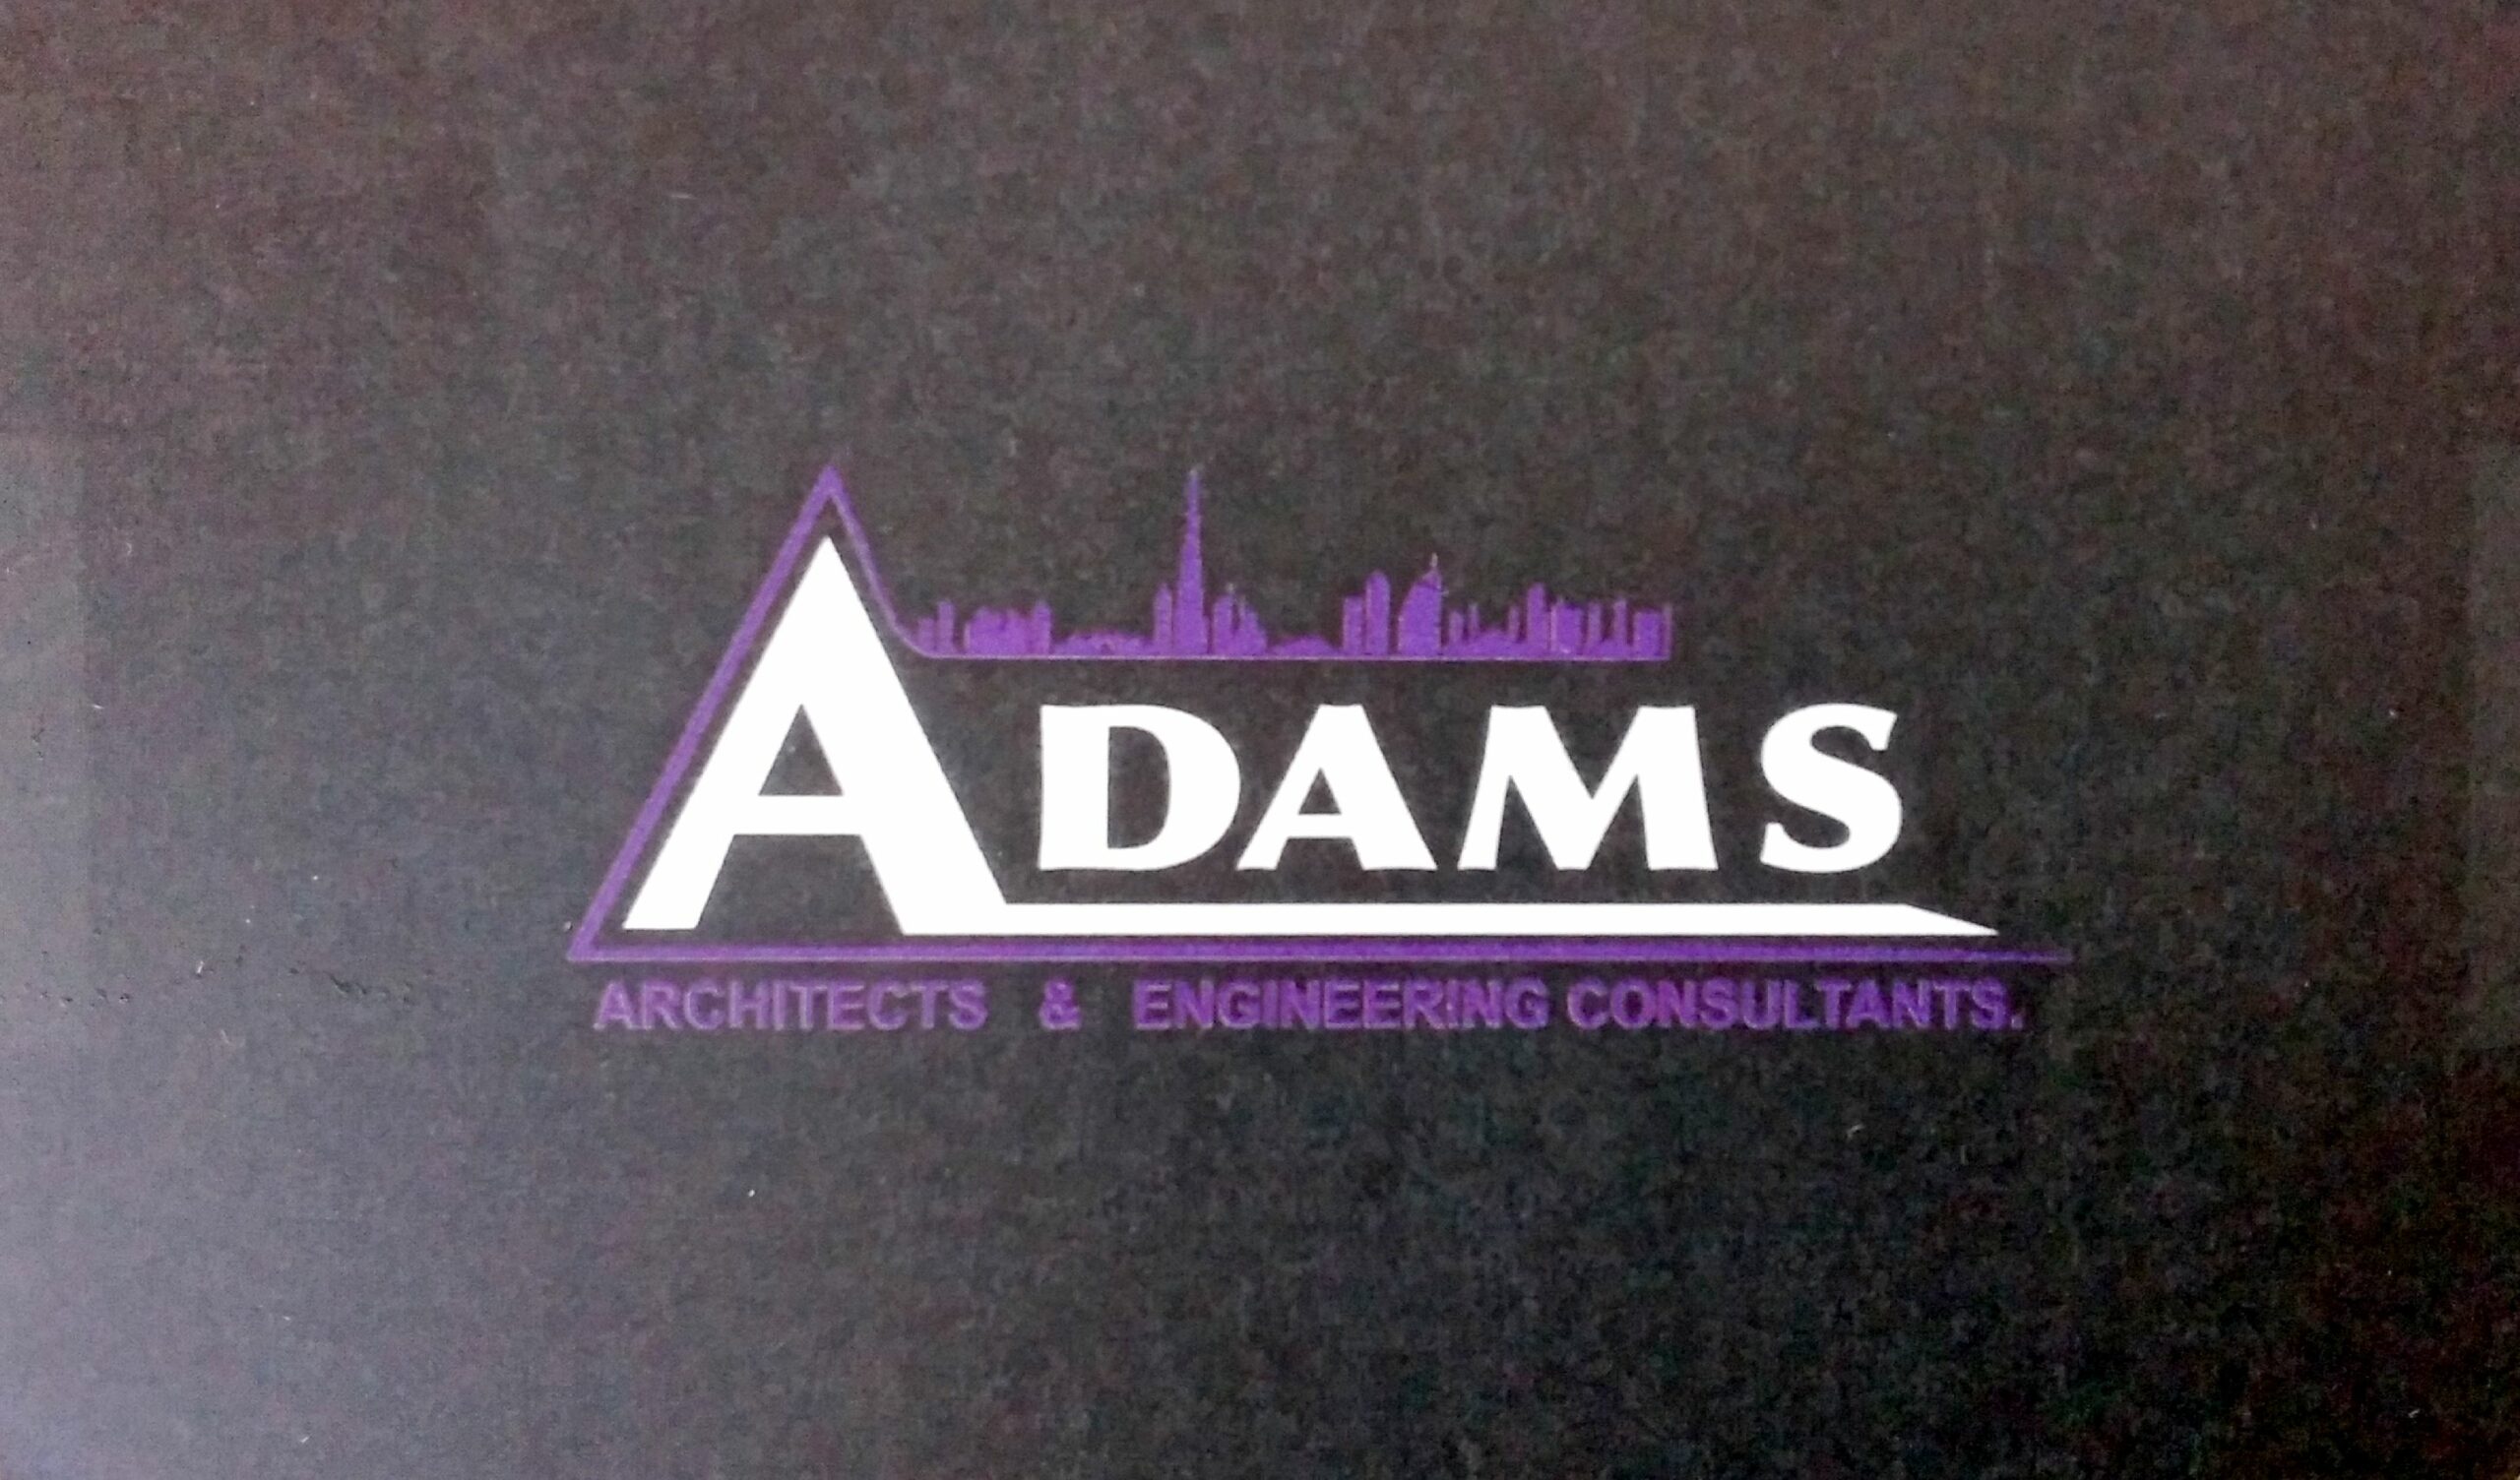 ADAMS ARCHITECTS & ENGINEERING CONSULTANTS